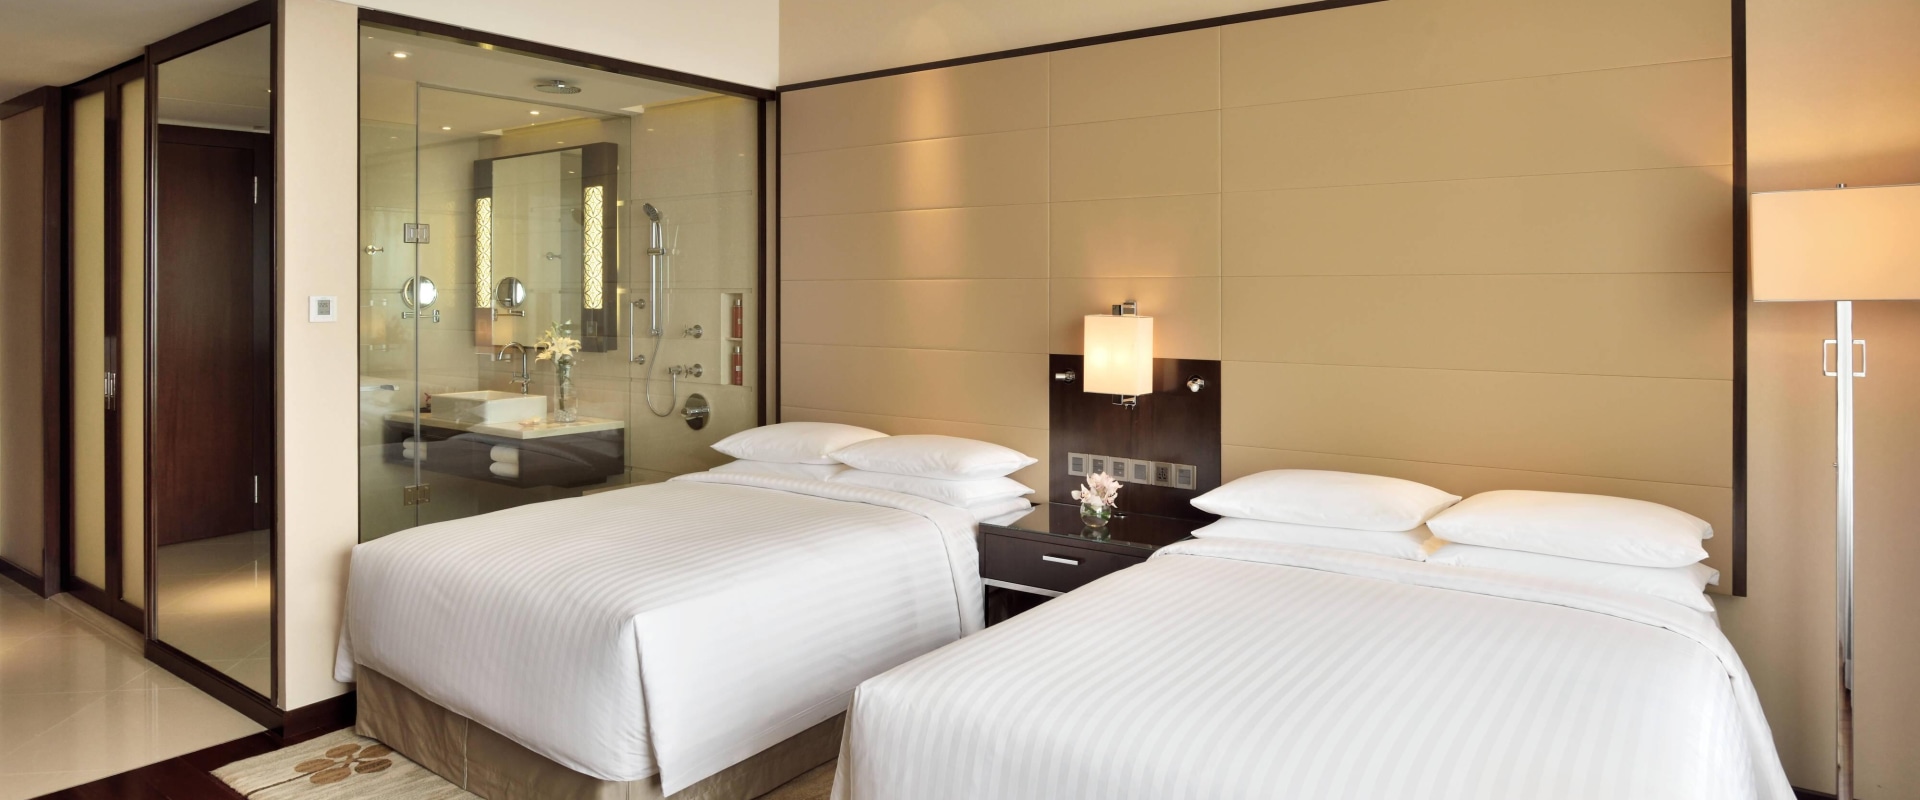 Kochi 5 Star Hotels: Unmatched Elegance & Luxury